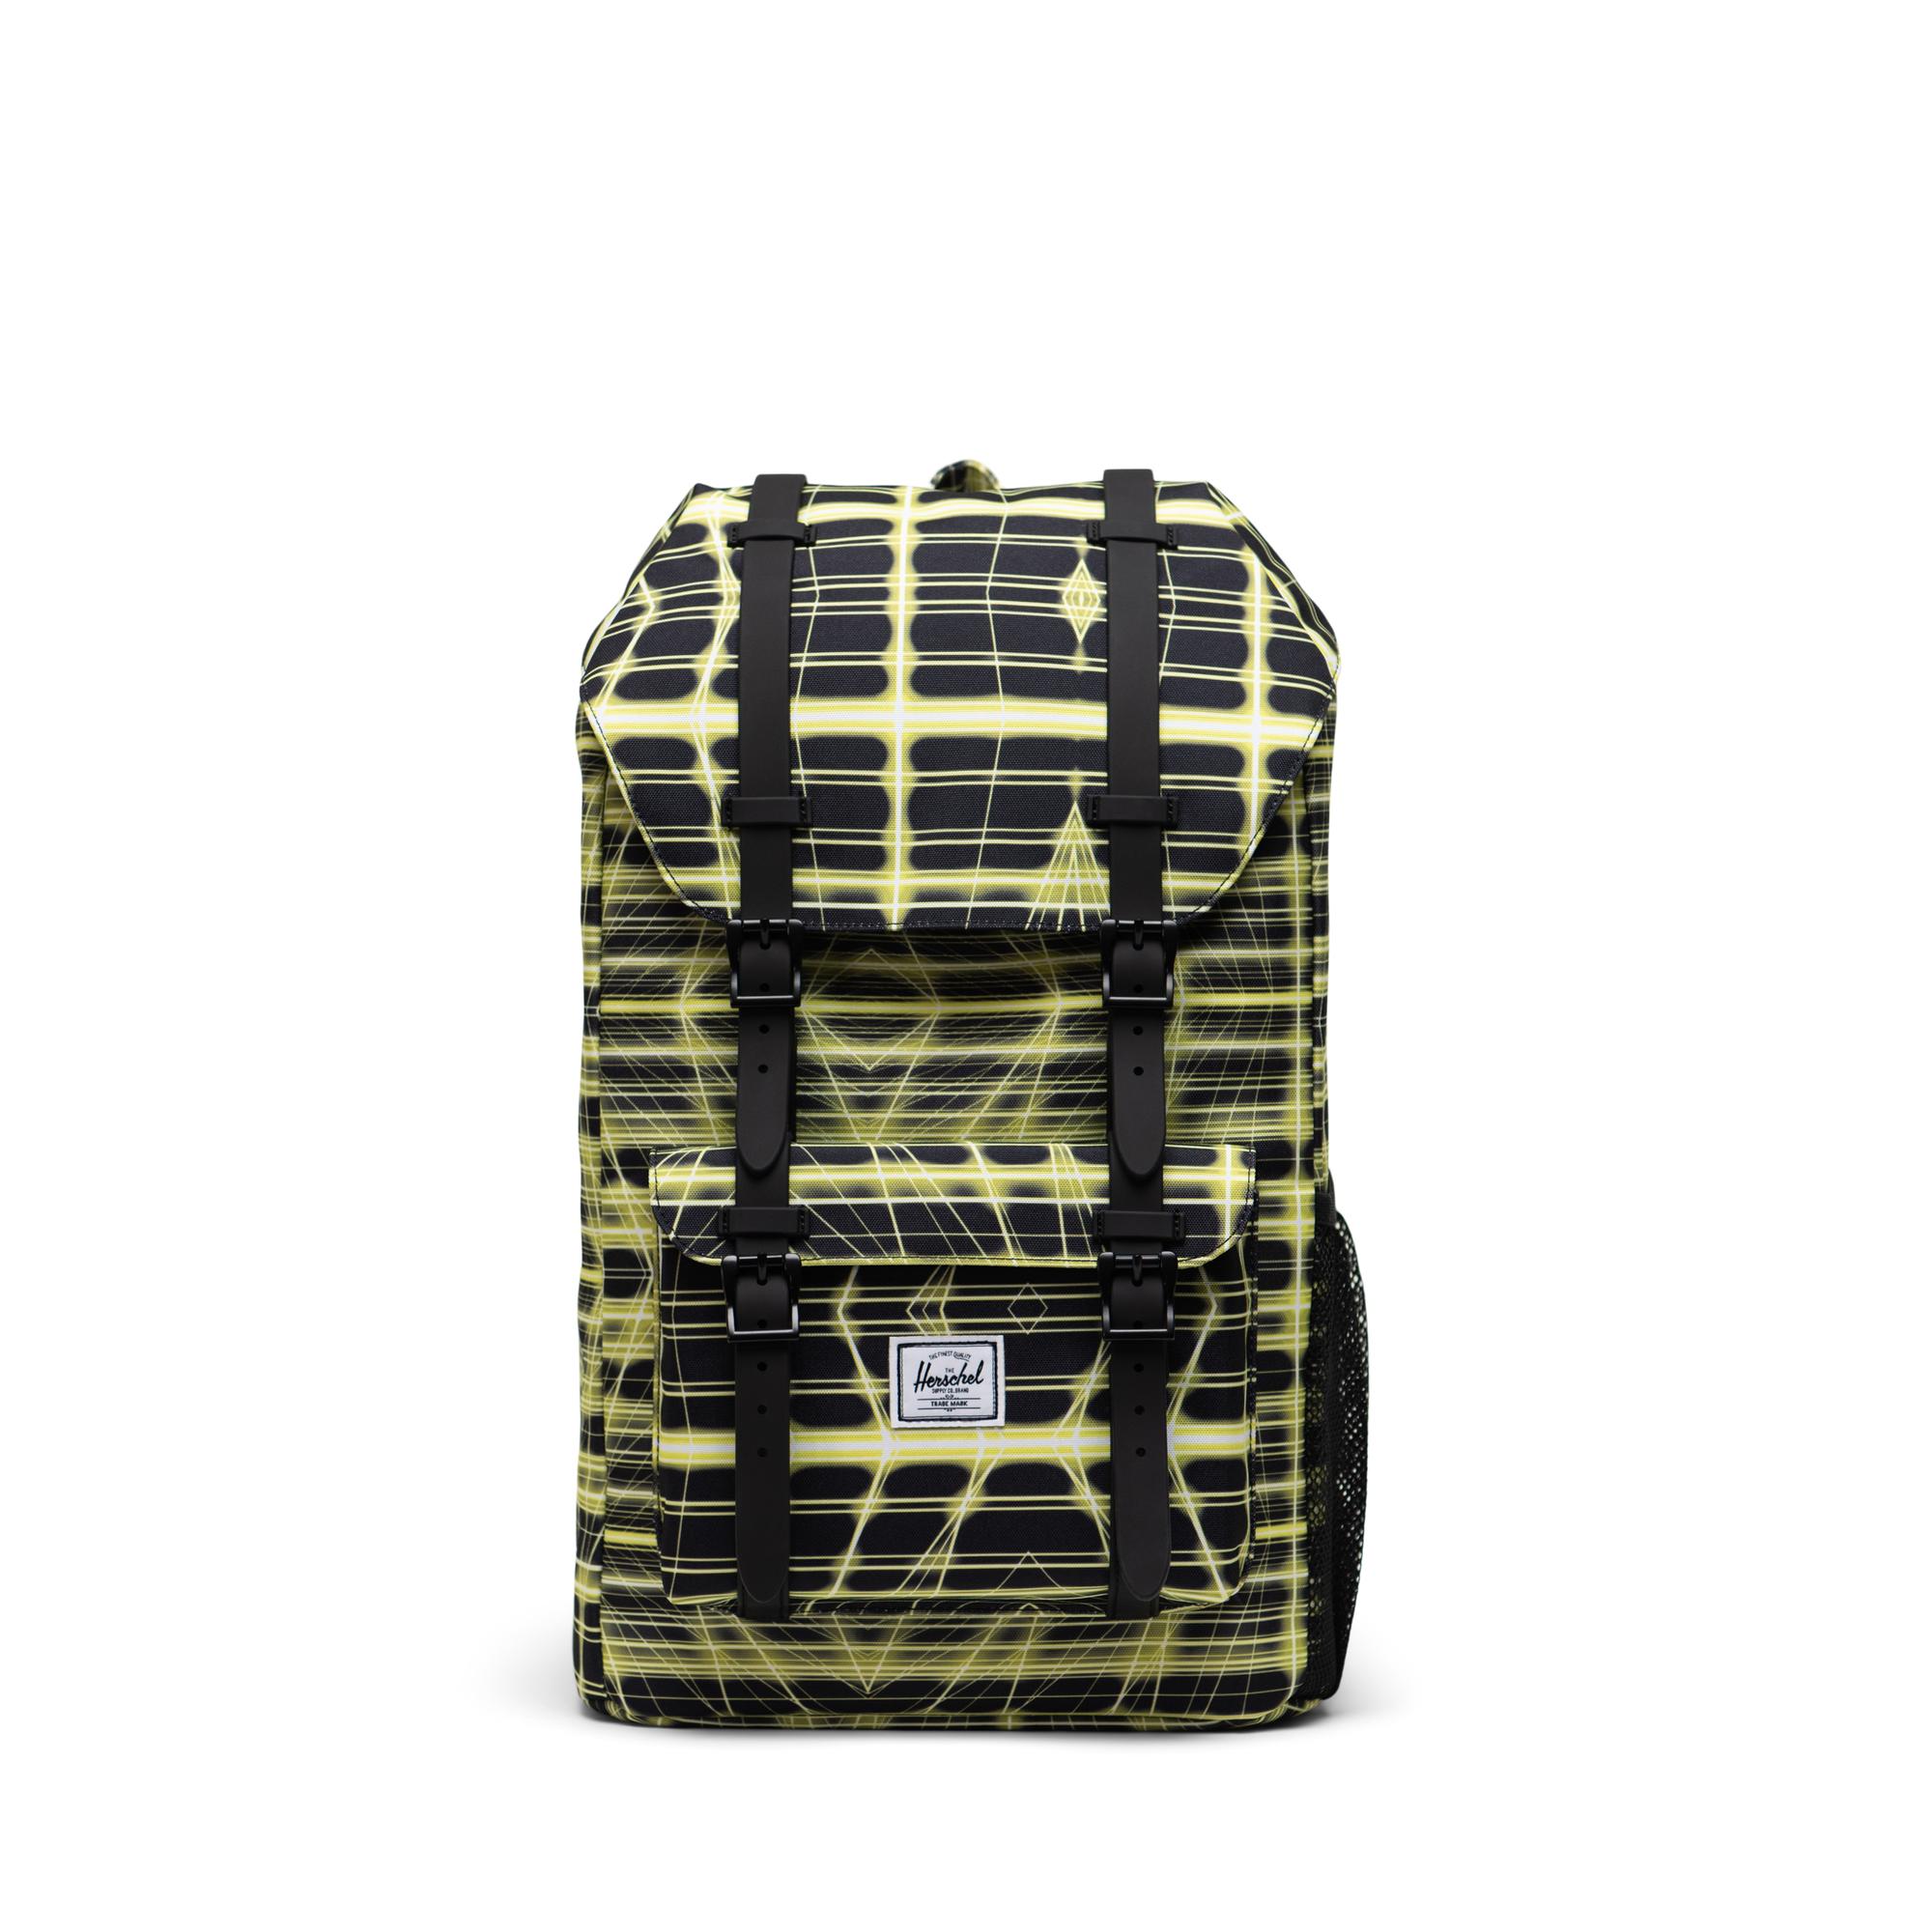 Border Stripe/Tan Leather Details about   Herschel Kids Little America Flapover Backpack